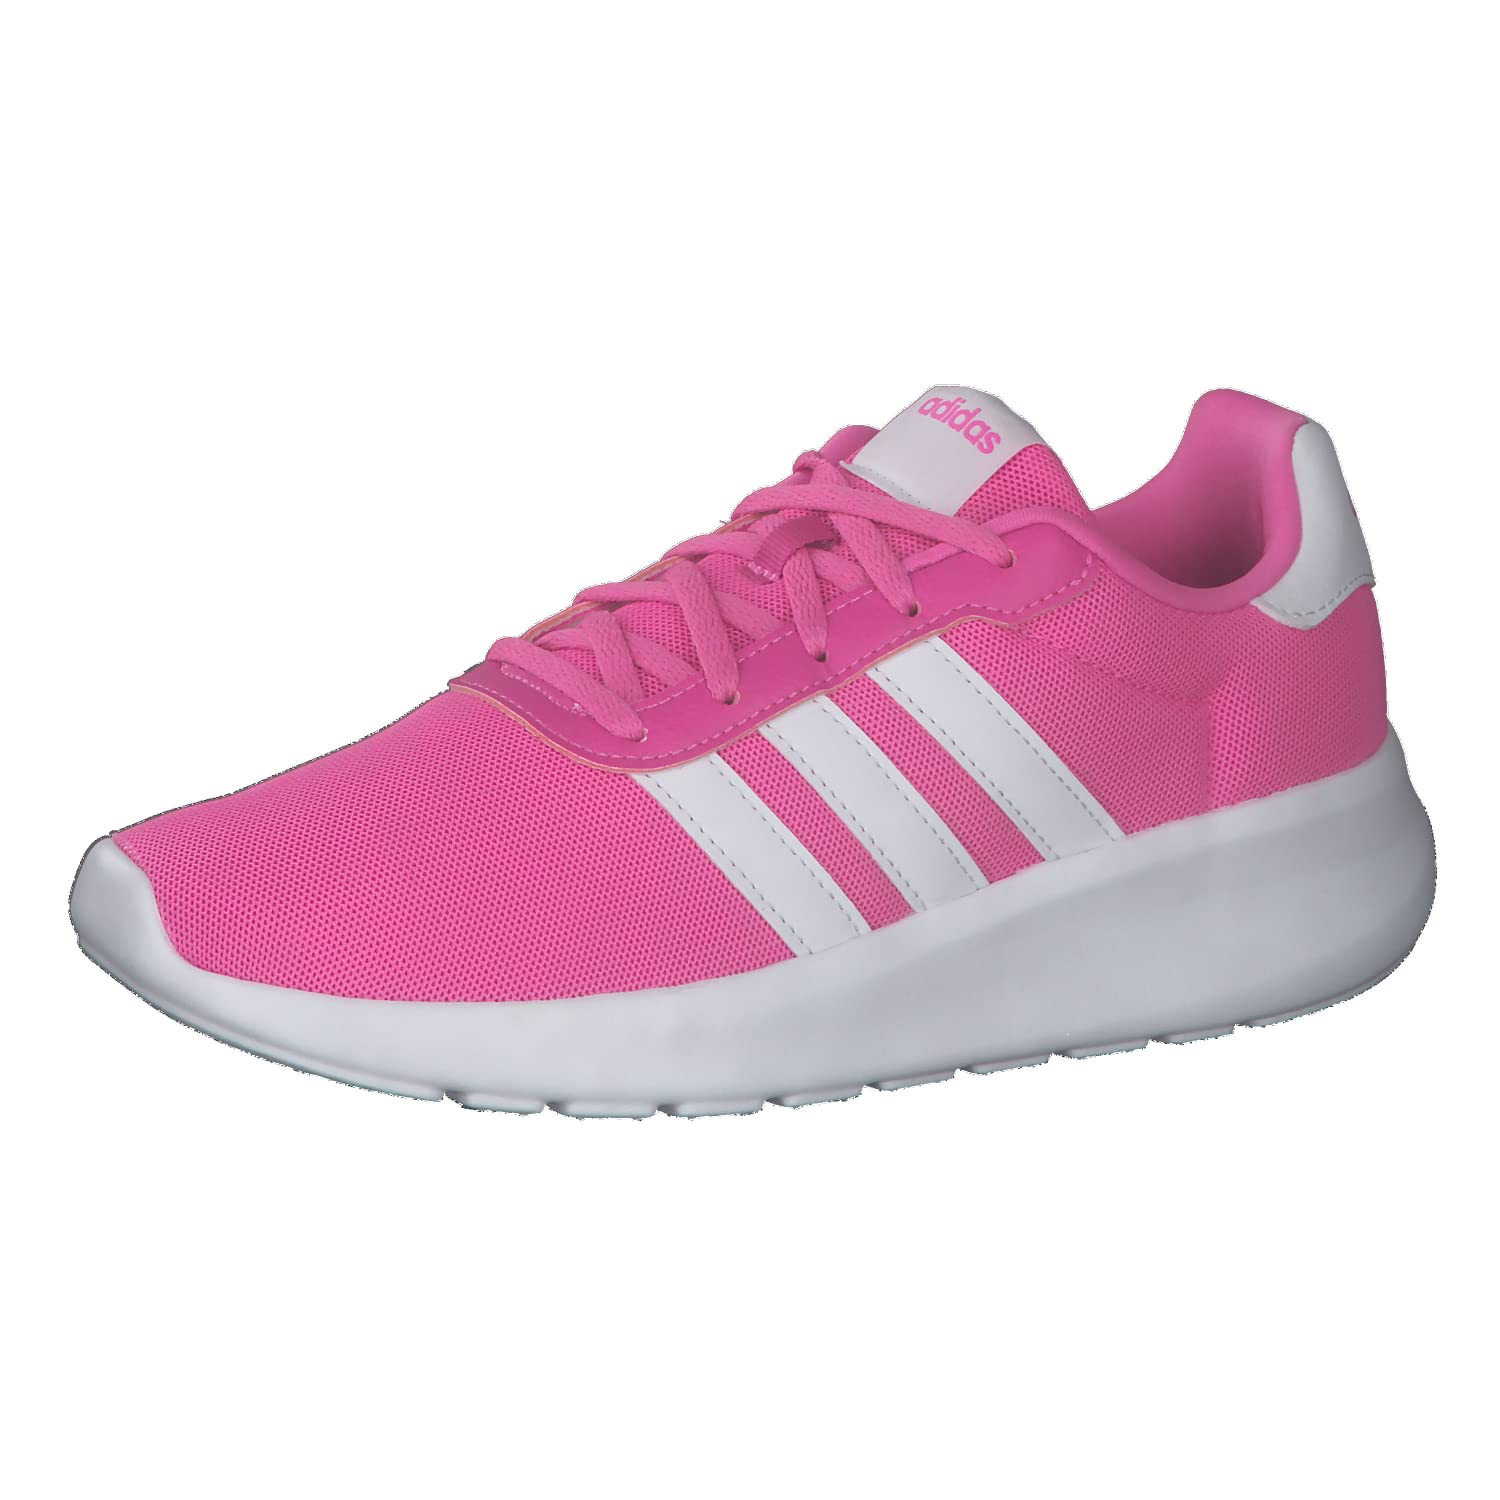 adidas Unisex Kinder Lite Racer 3.0 Sneakers, Screaming Pink/Ftwr White/Core Black, 25 EU